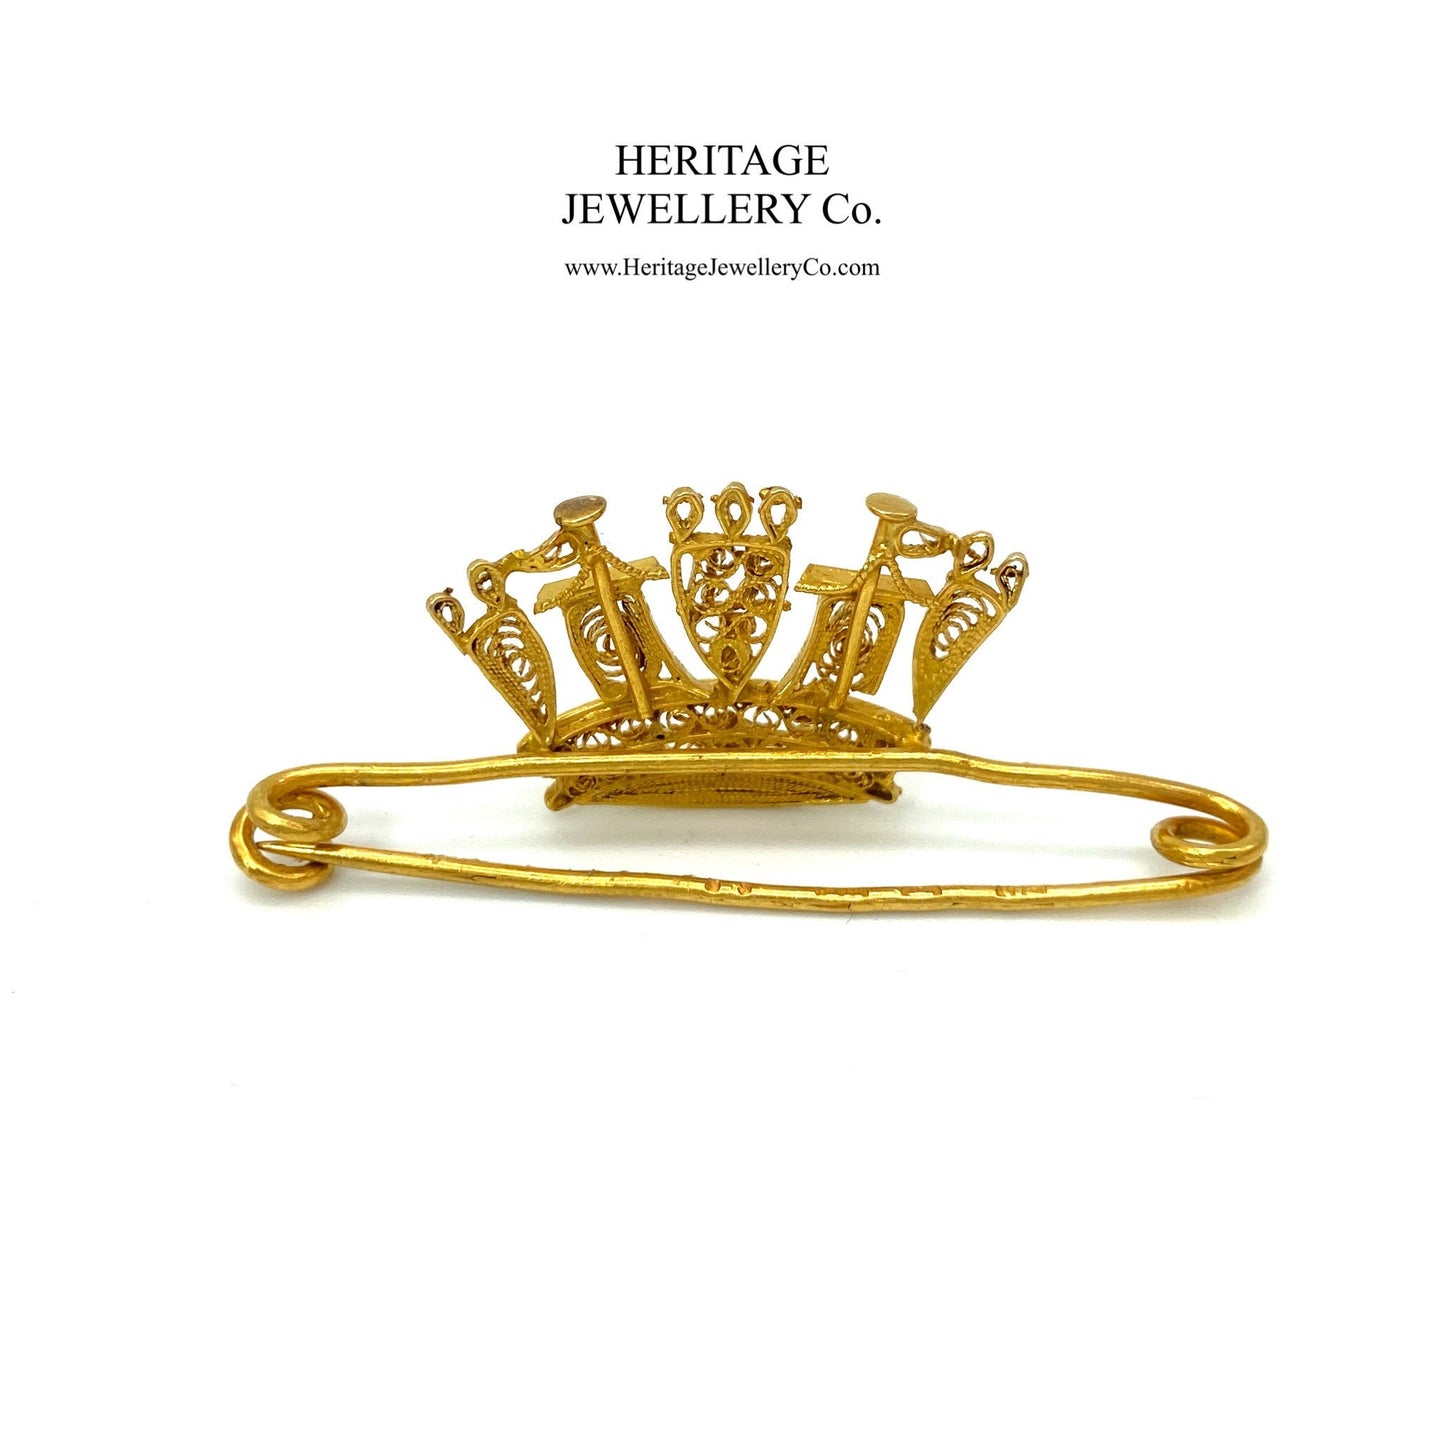 Antique Victorian Gold Naval Crown Brooch